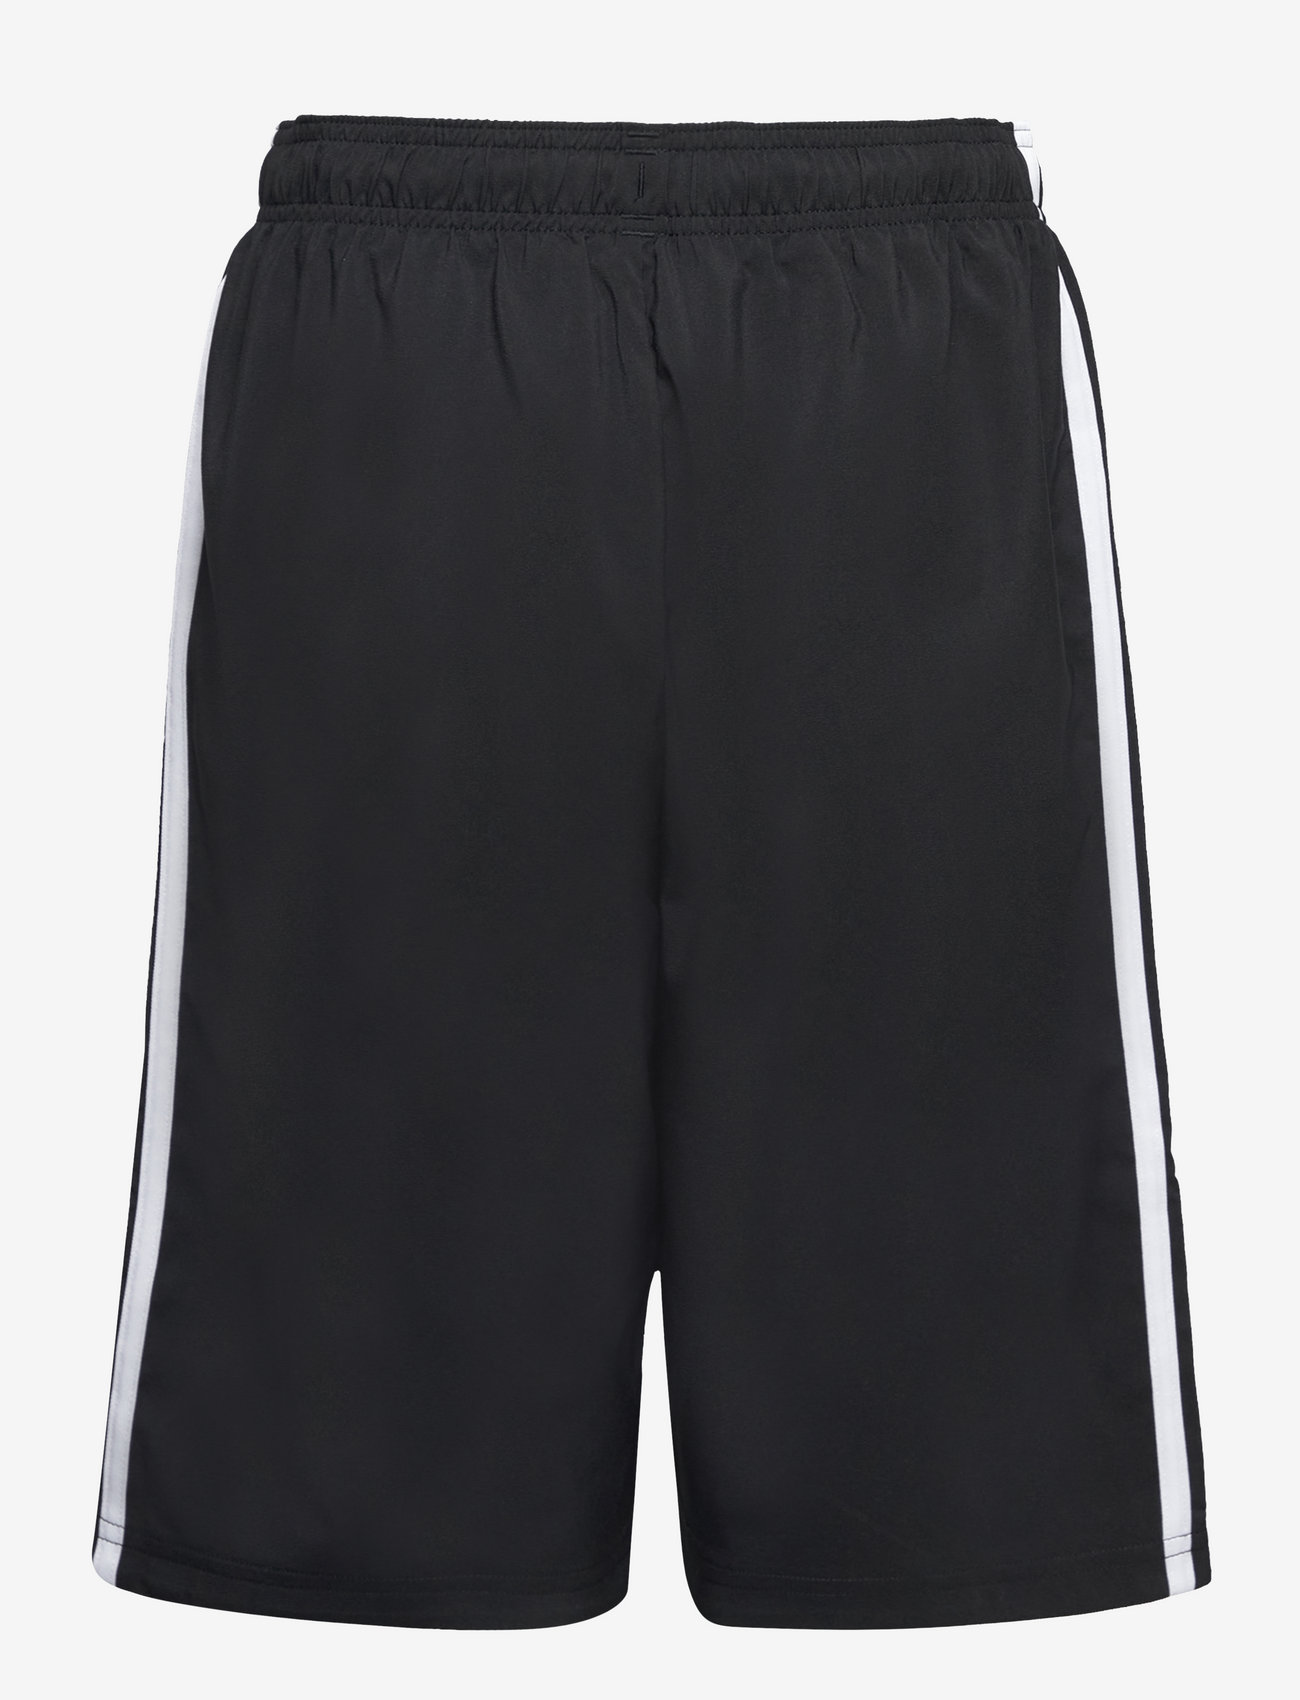 adidas Sportswear - U 3S WN SHORT - zomerkoopjes - black/white - 1